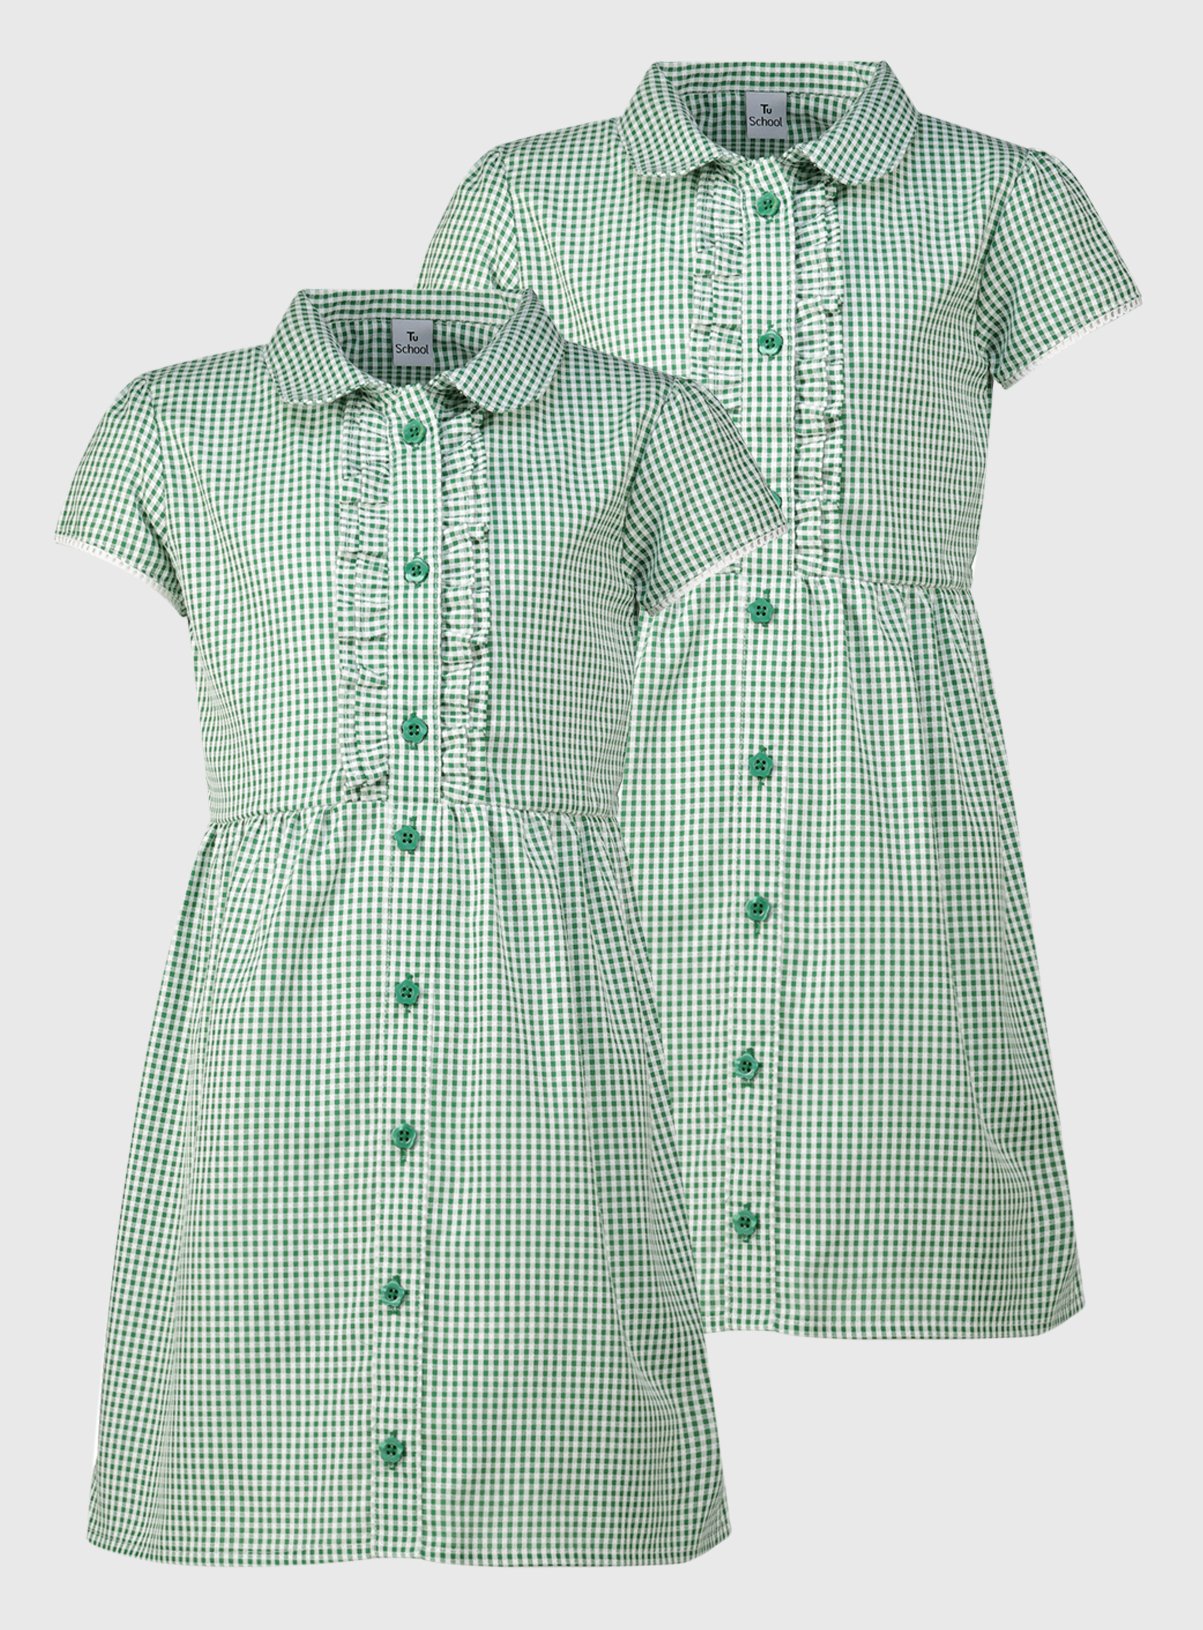 Buy Green Gingham Classic Dress 2 Pack ...